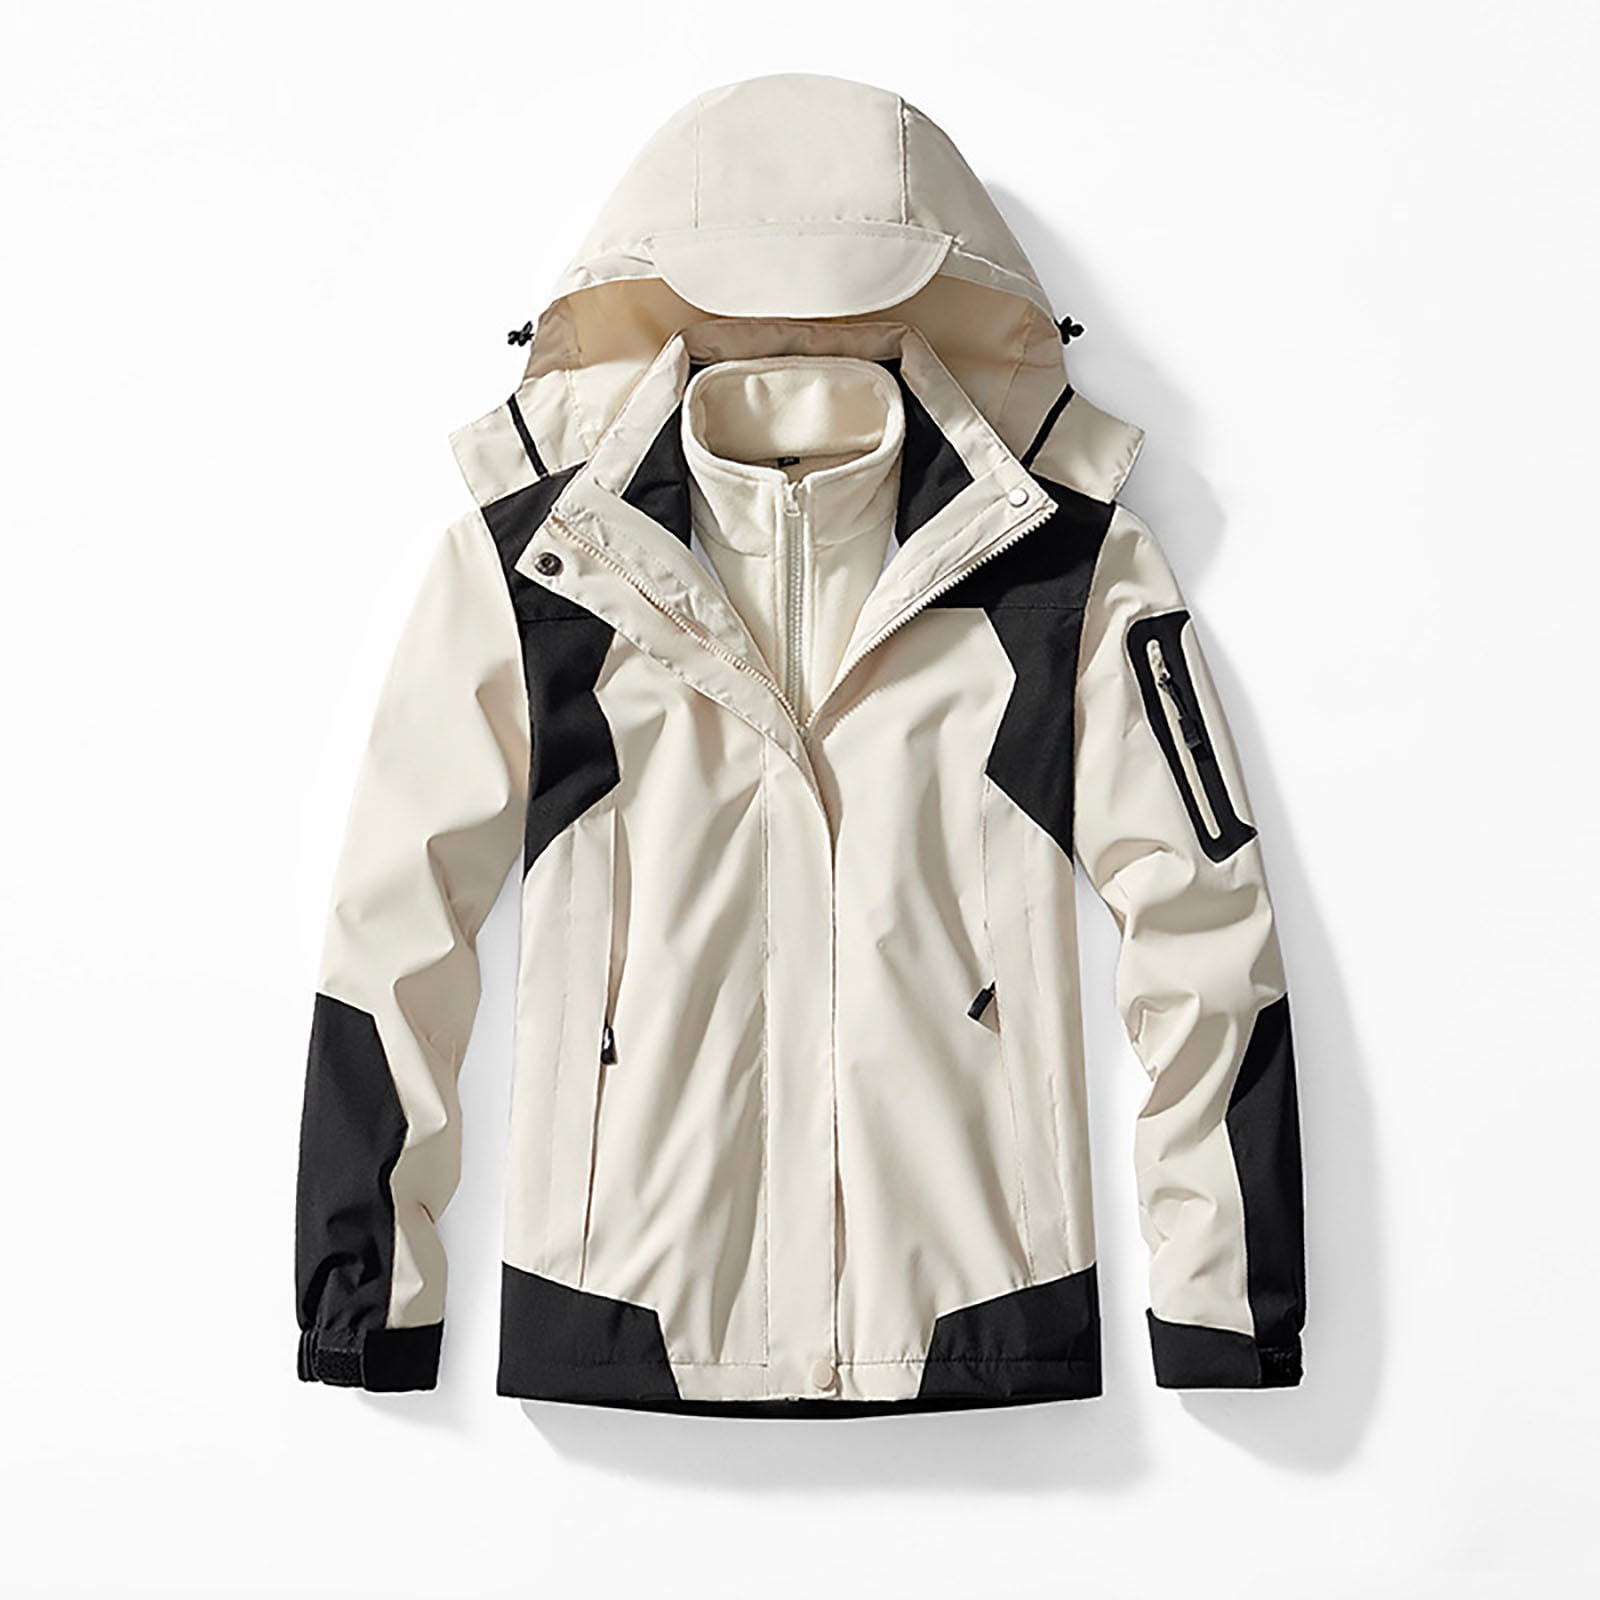 Dianli Rain Jacket Coat with Hood Long Sleeve Casual Fashion